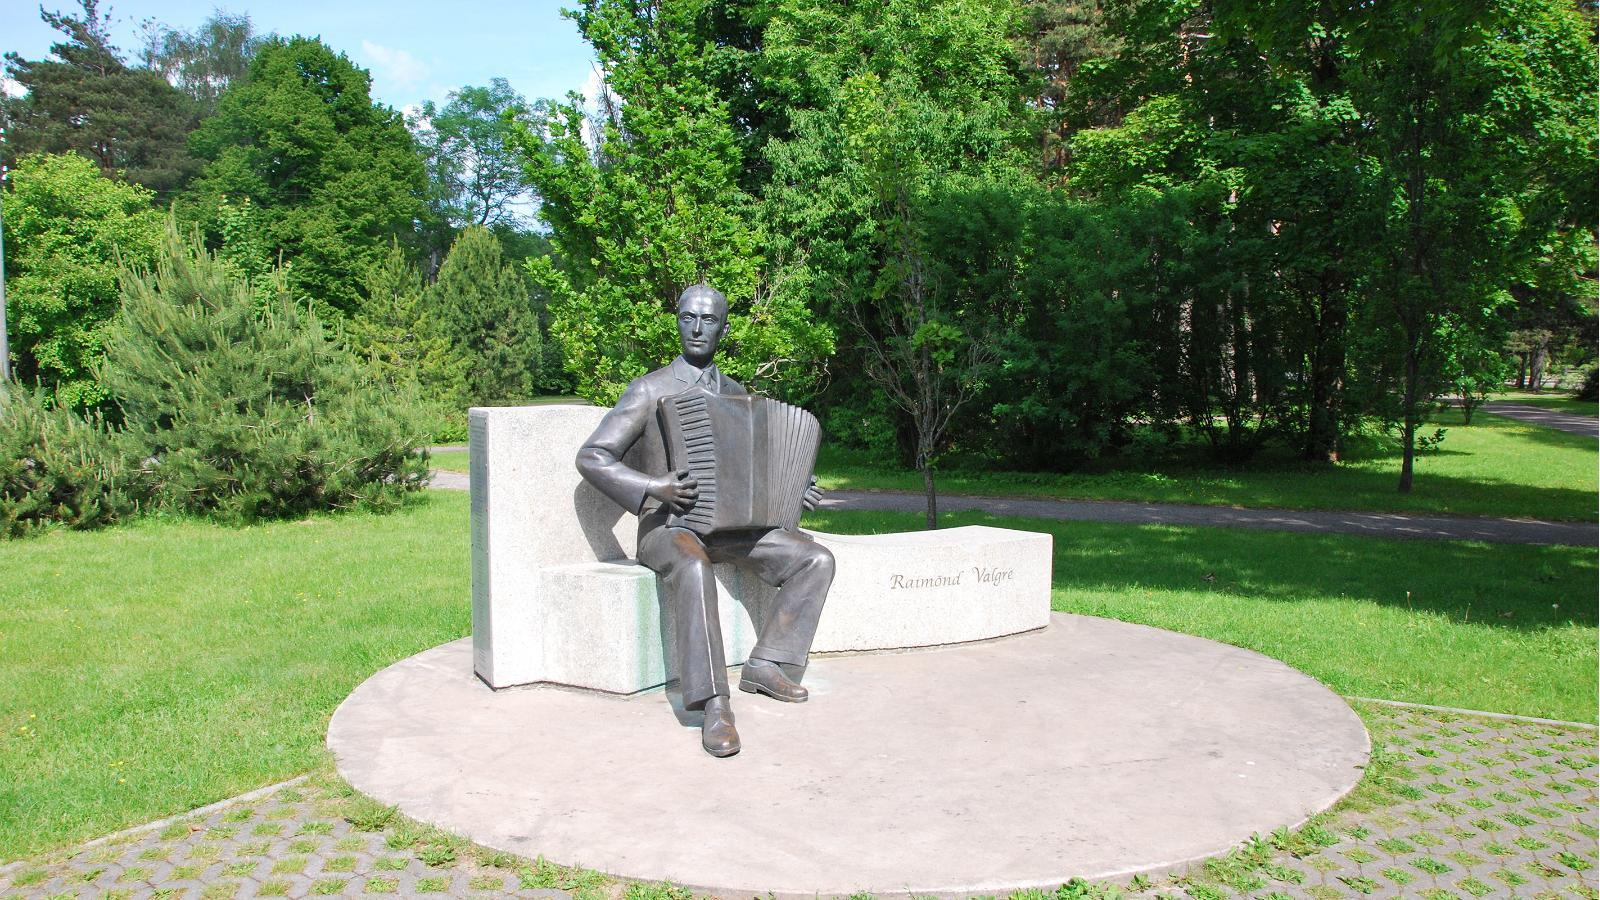 Statue of Raimond Valgre